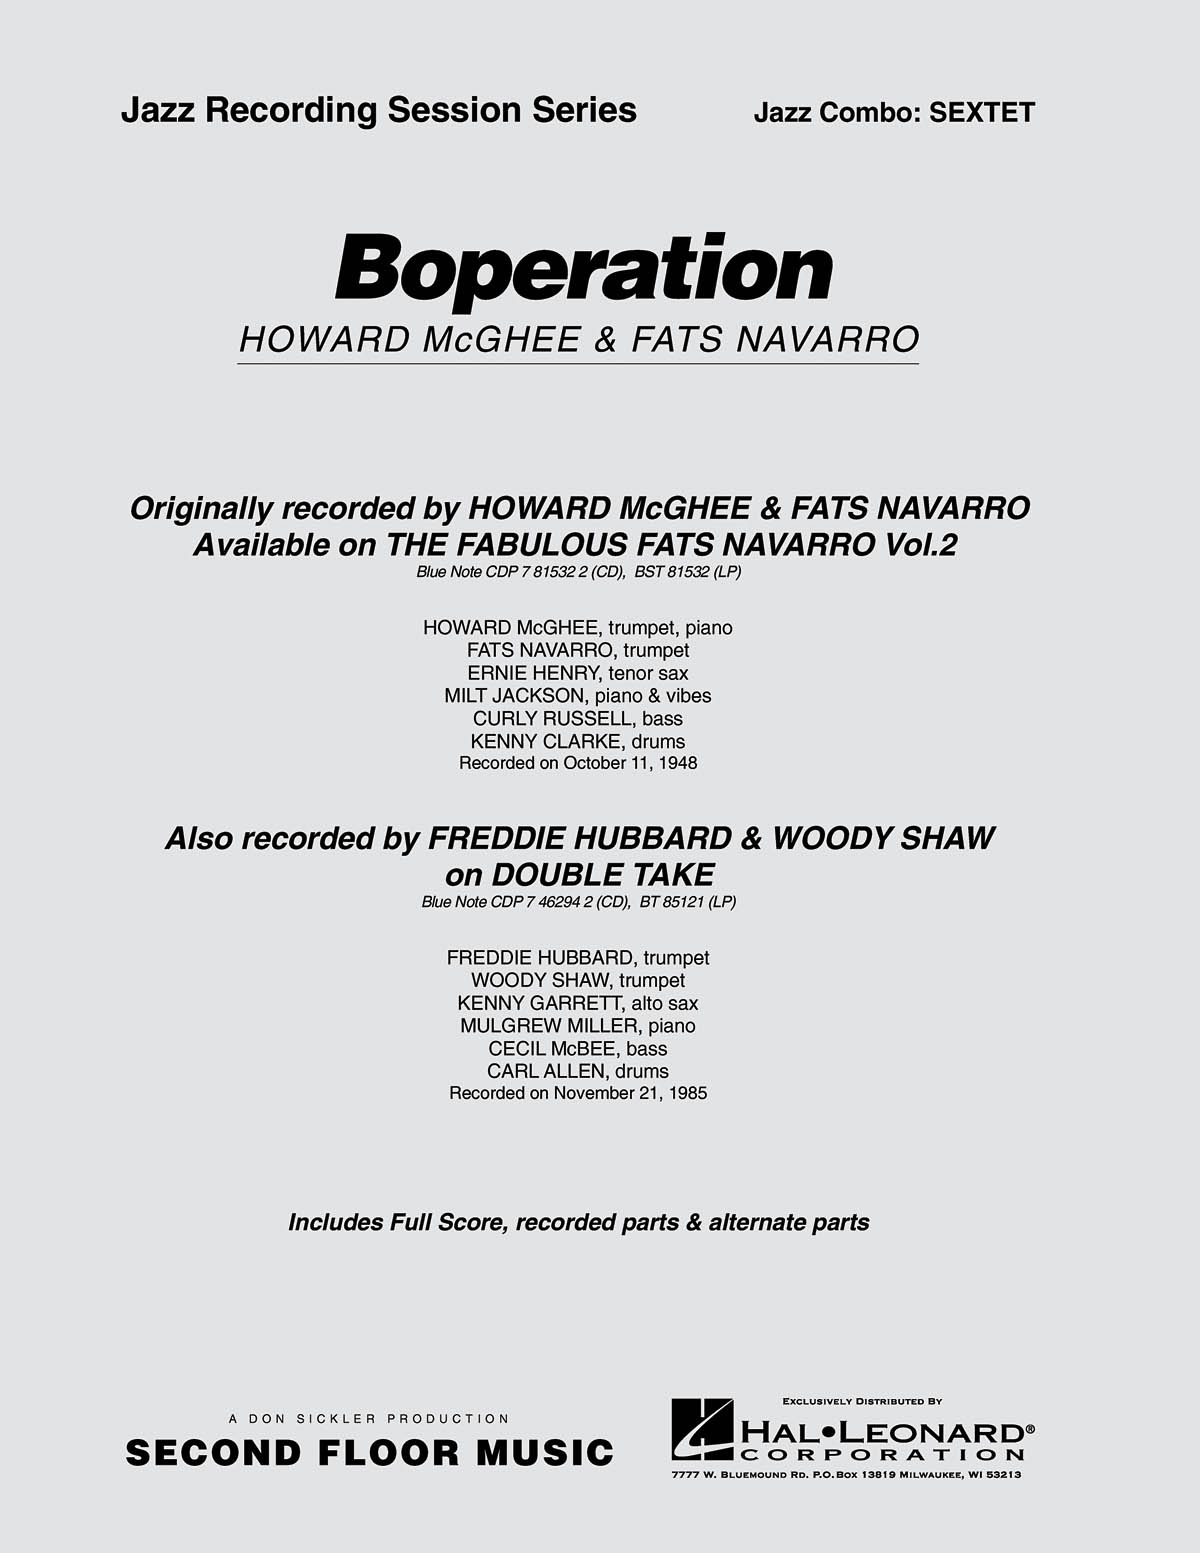 Boperation